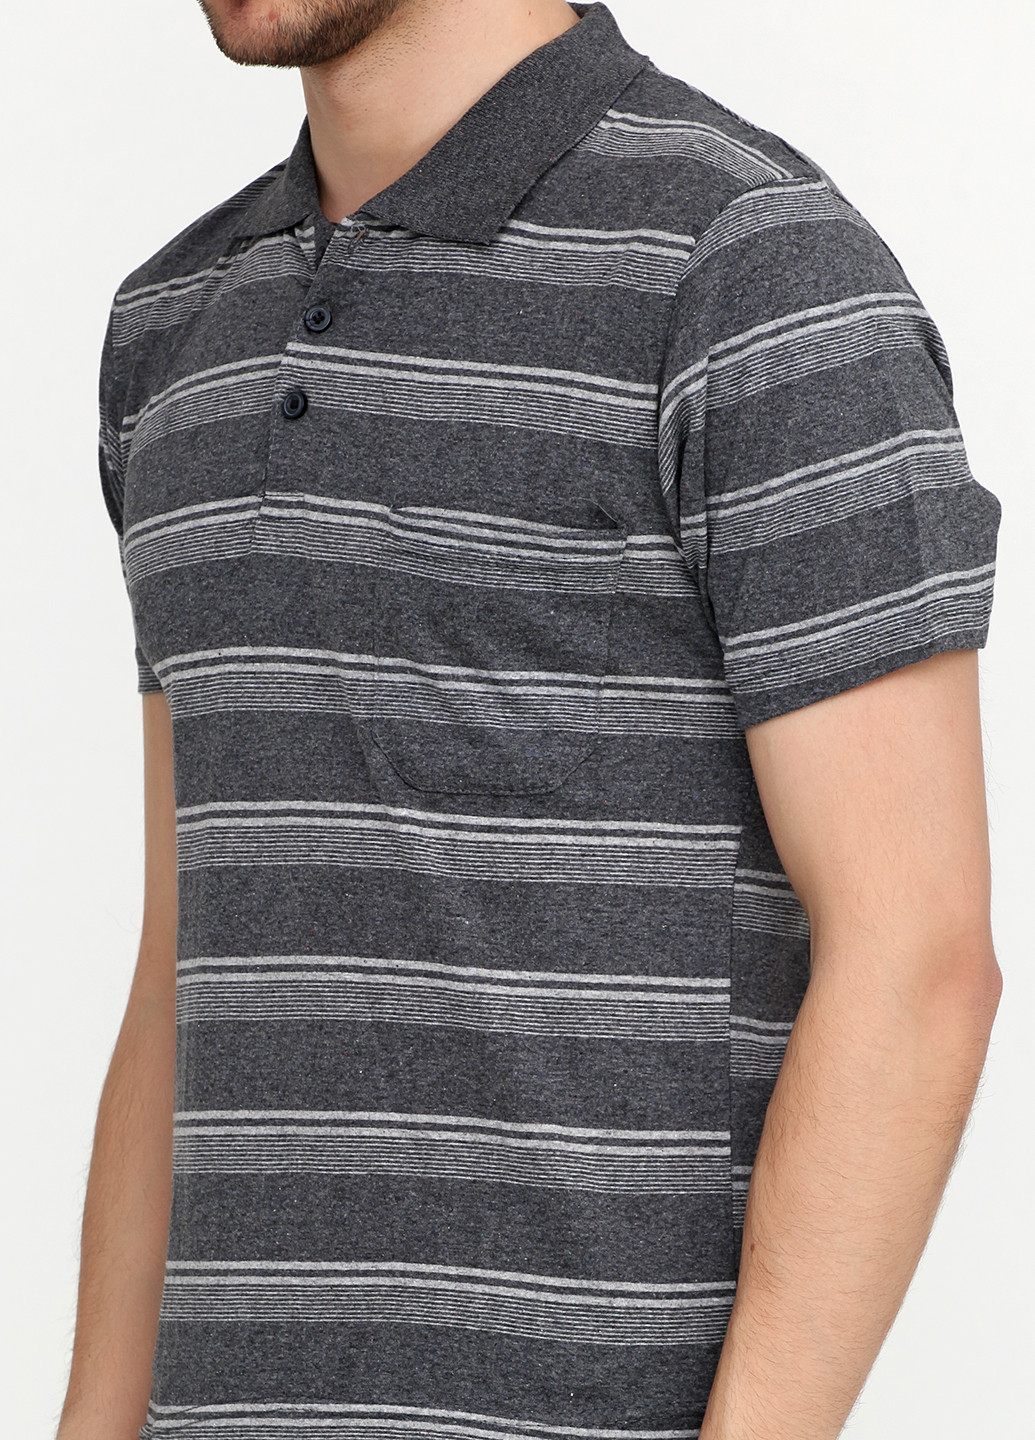 Грифельно-серая футболка-поло для мужчин Chiarotex в полоску